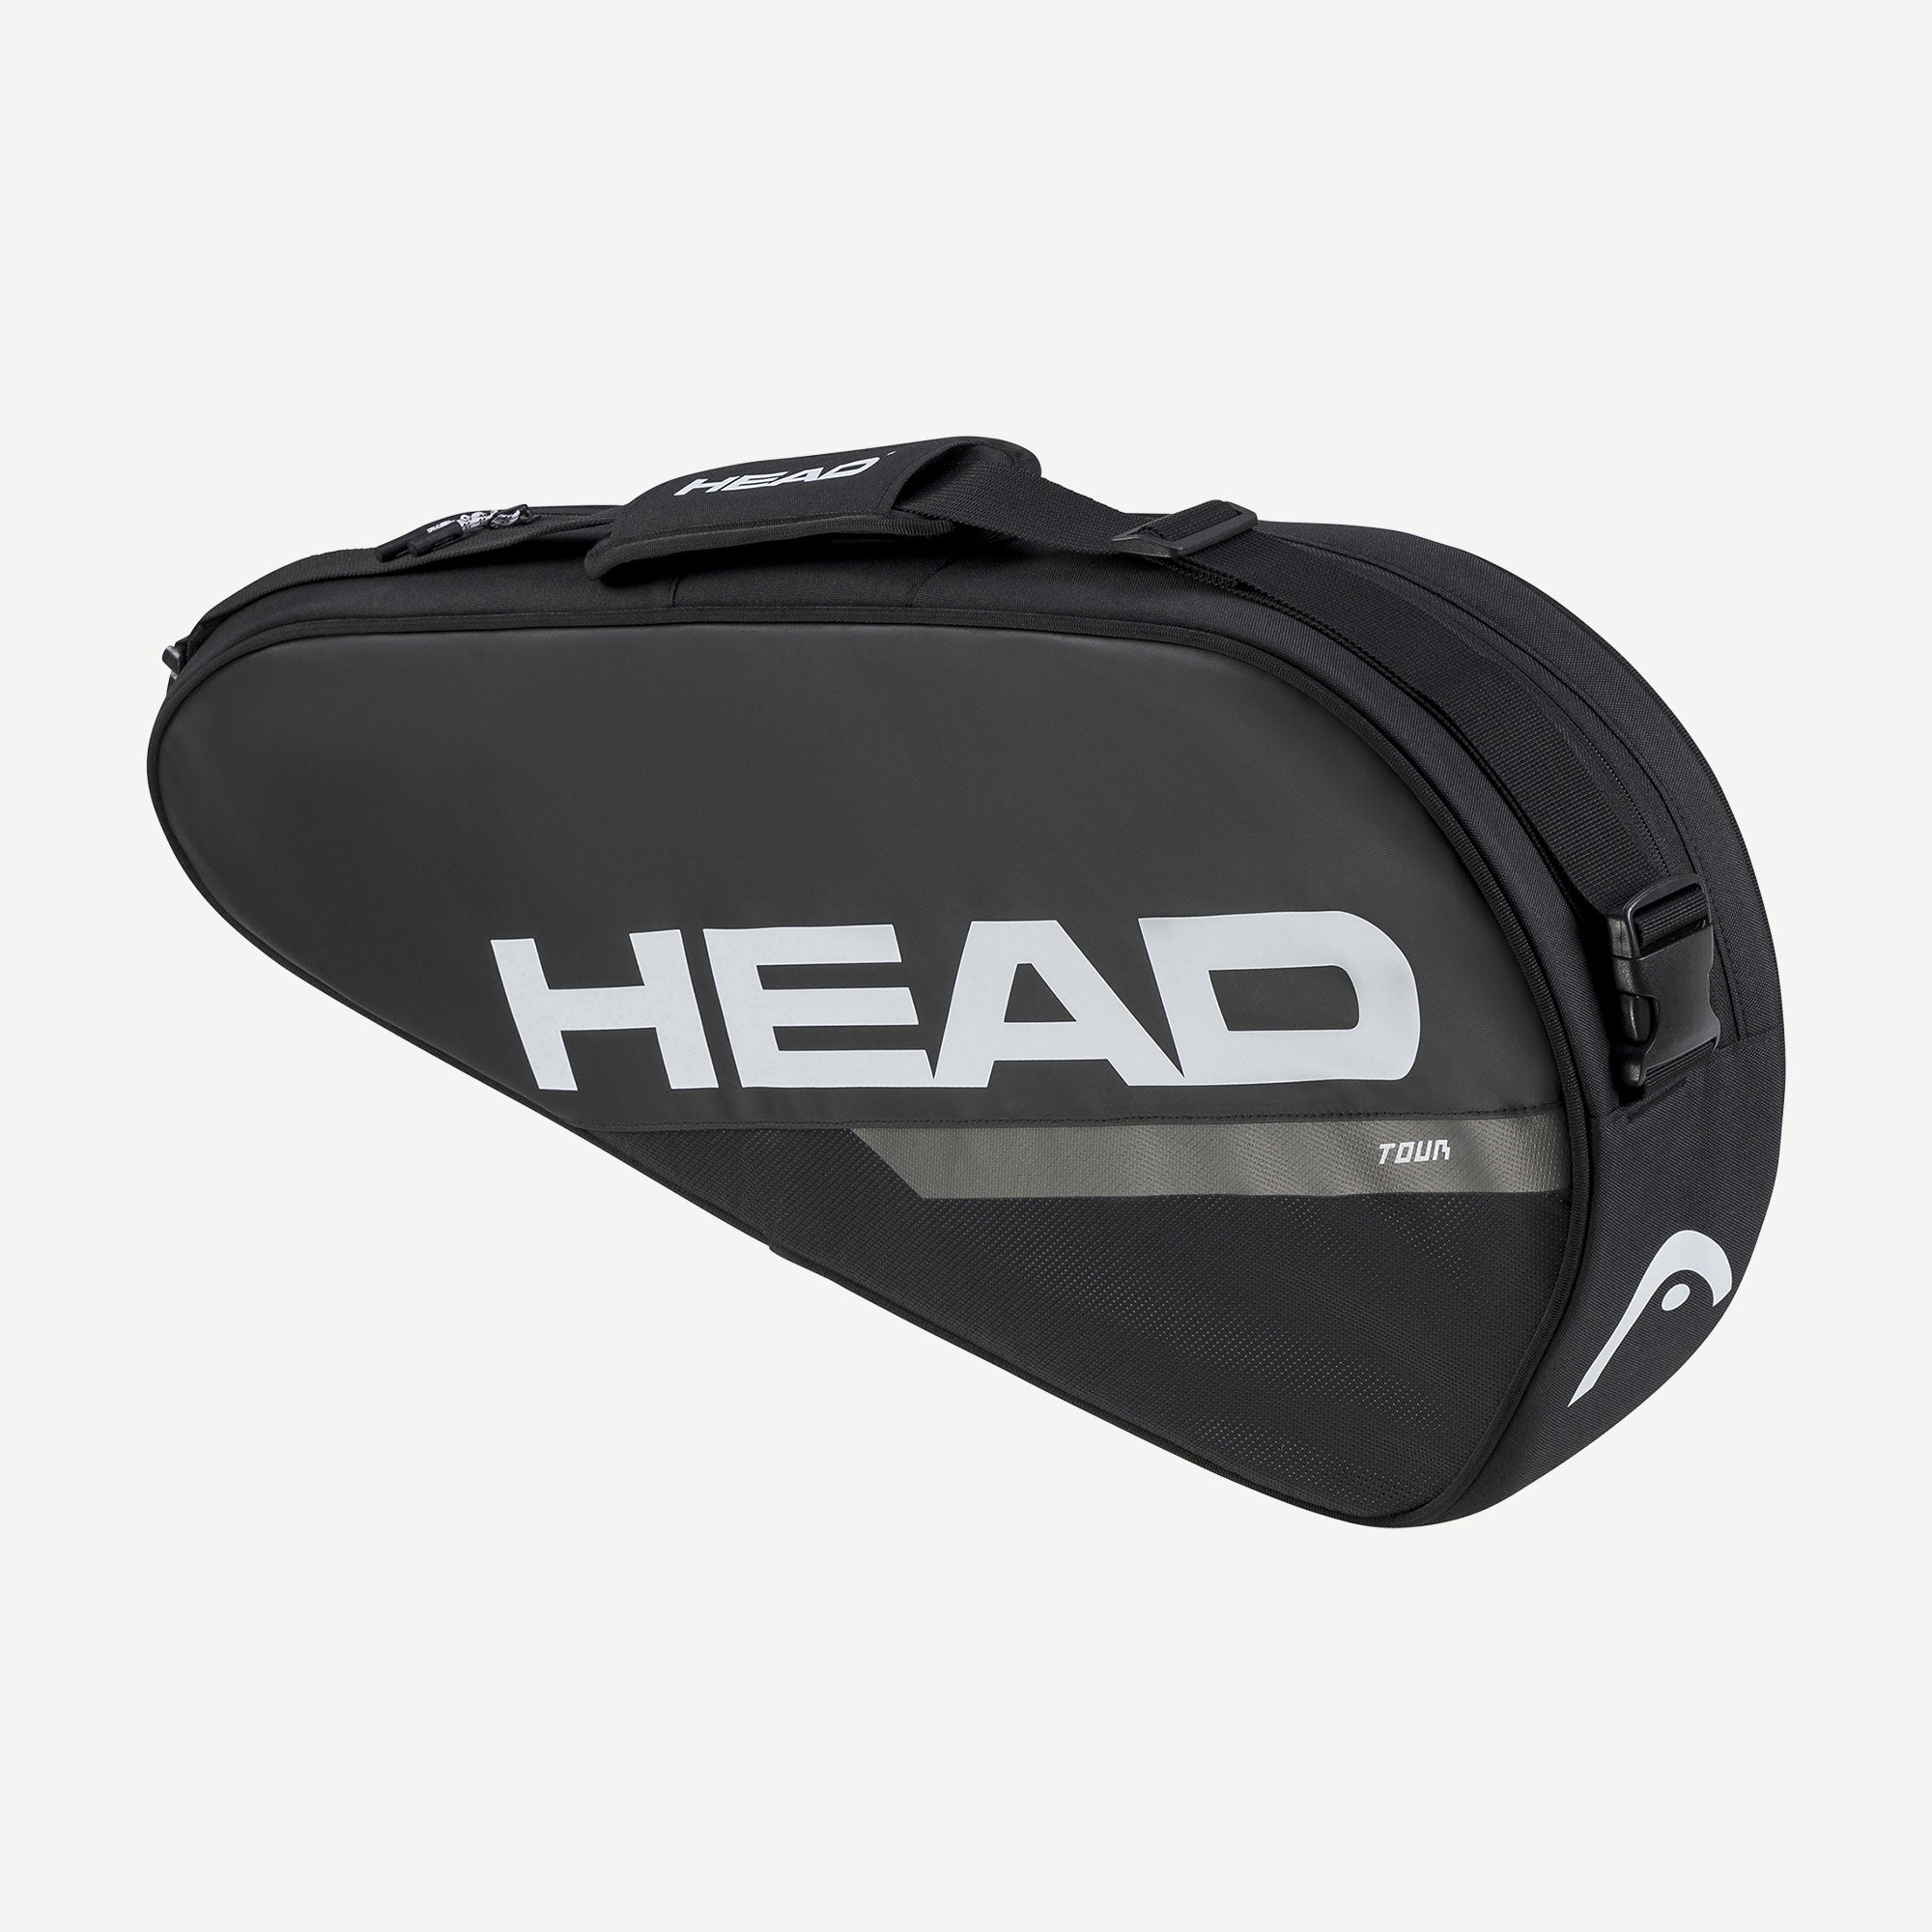 HEAD Tour Racket Tennis Bag S - Black (1)